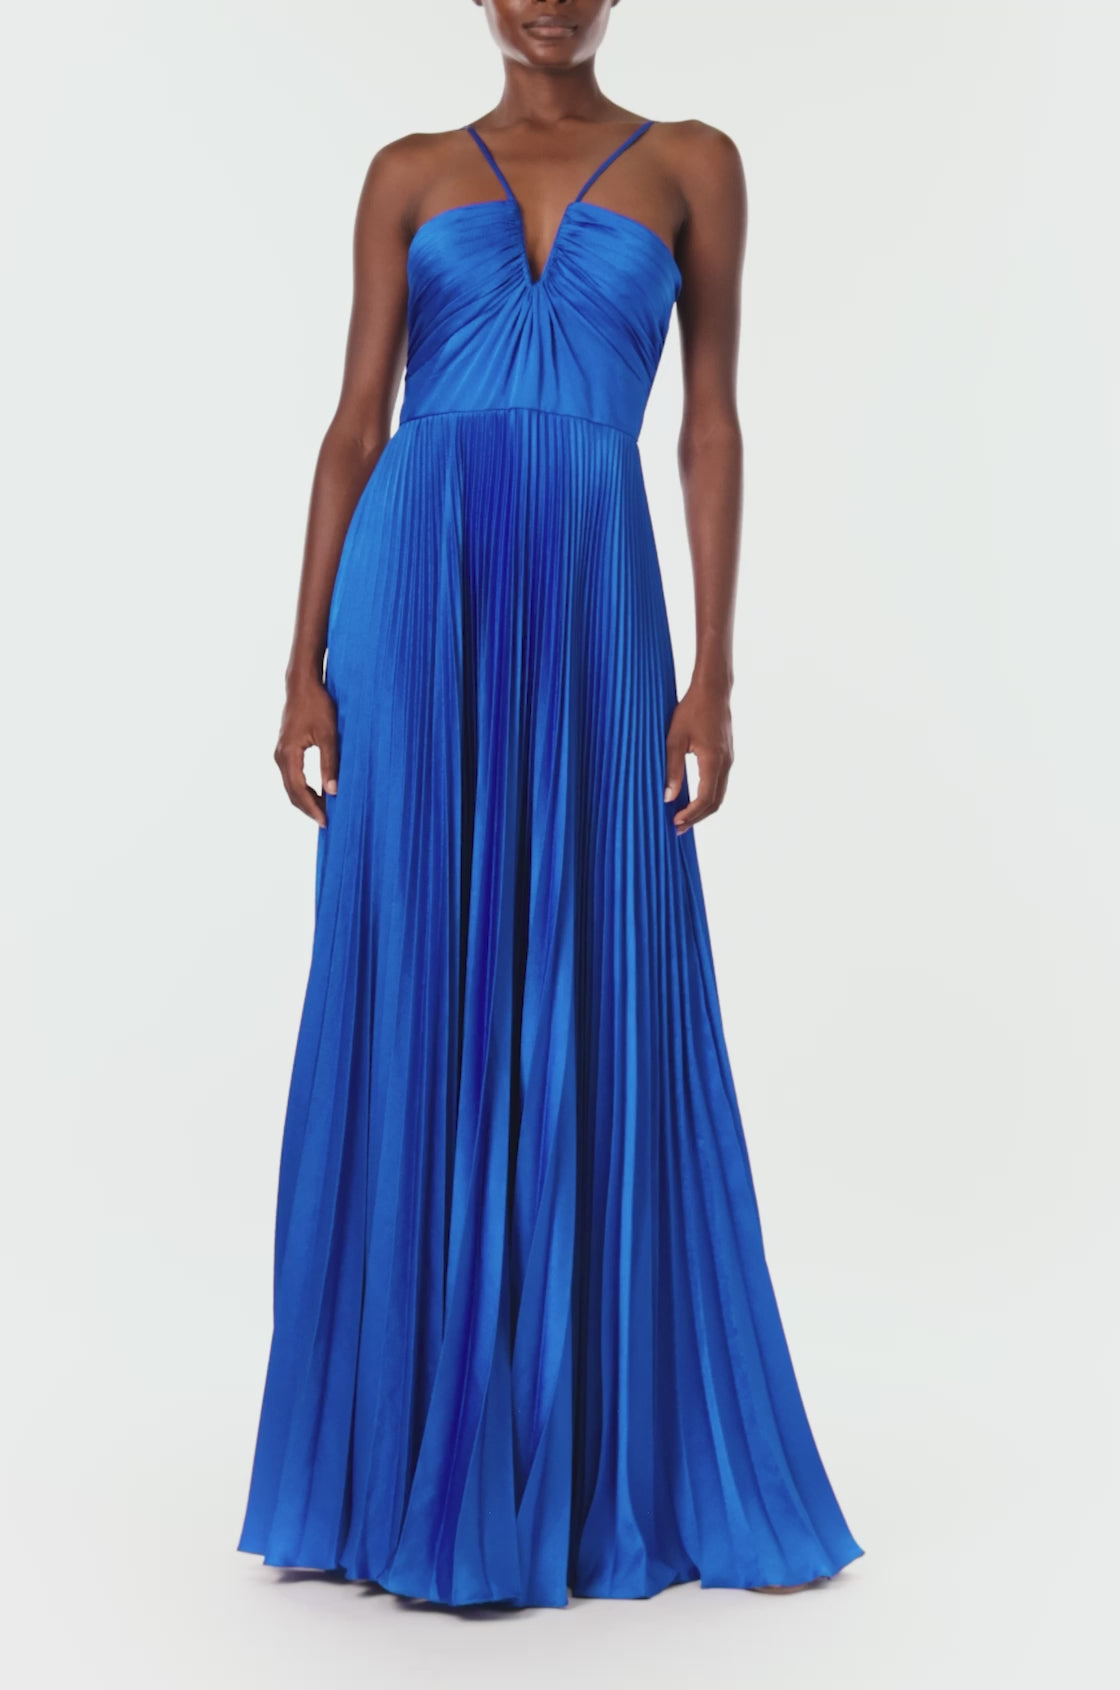 ML Monique Lhuillier cobalt blue satin long dress with halter neckline.